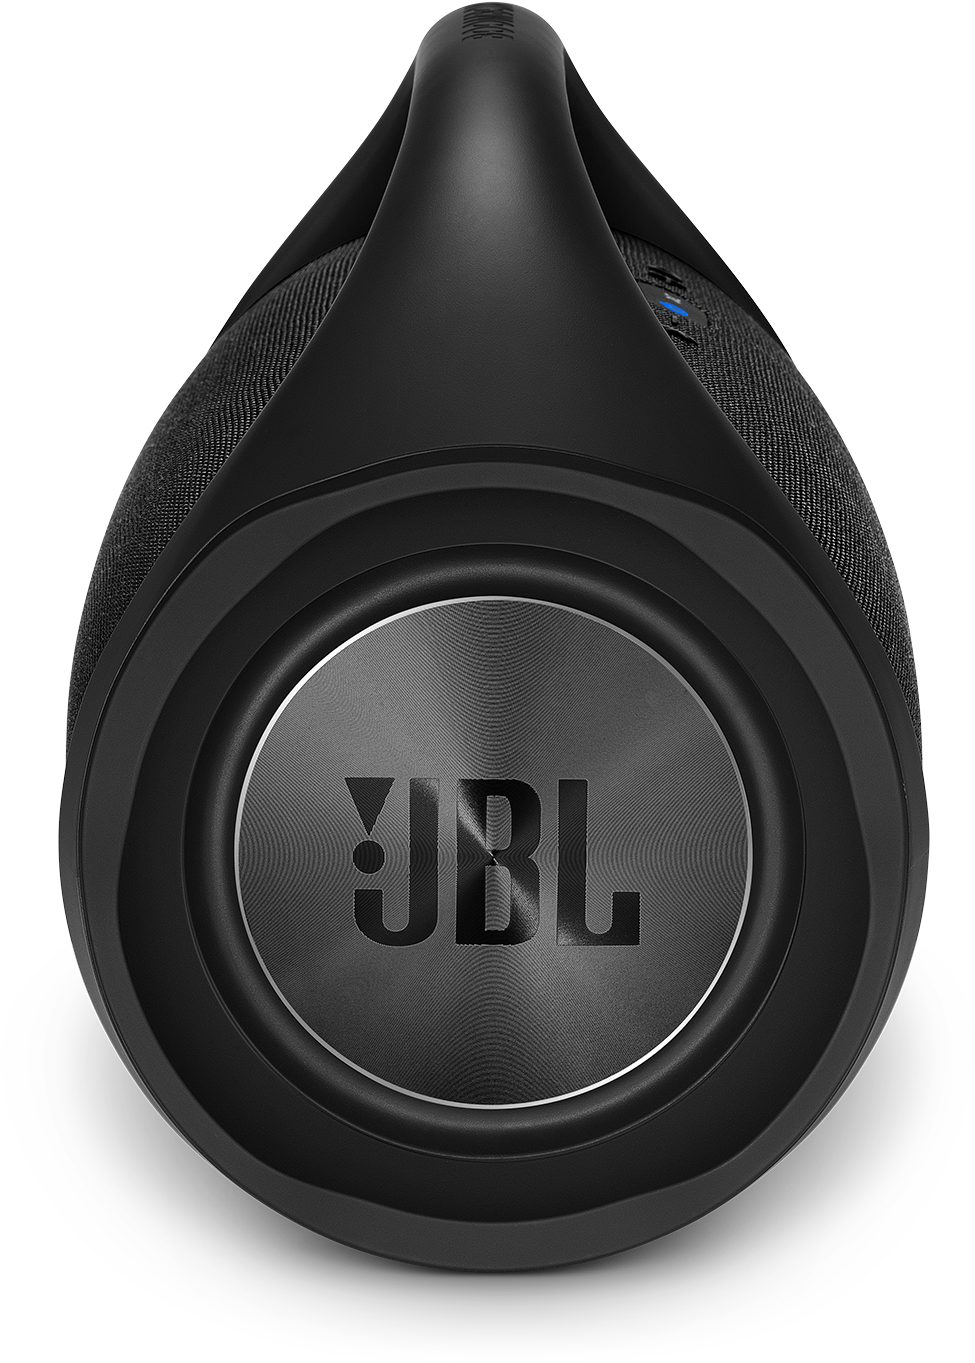 J B L Portable Speaker Top View PNG